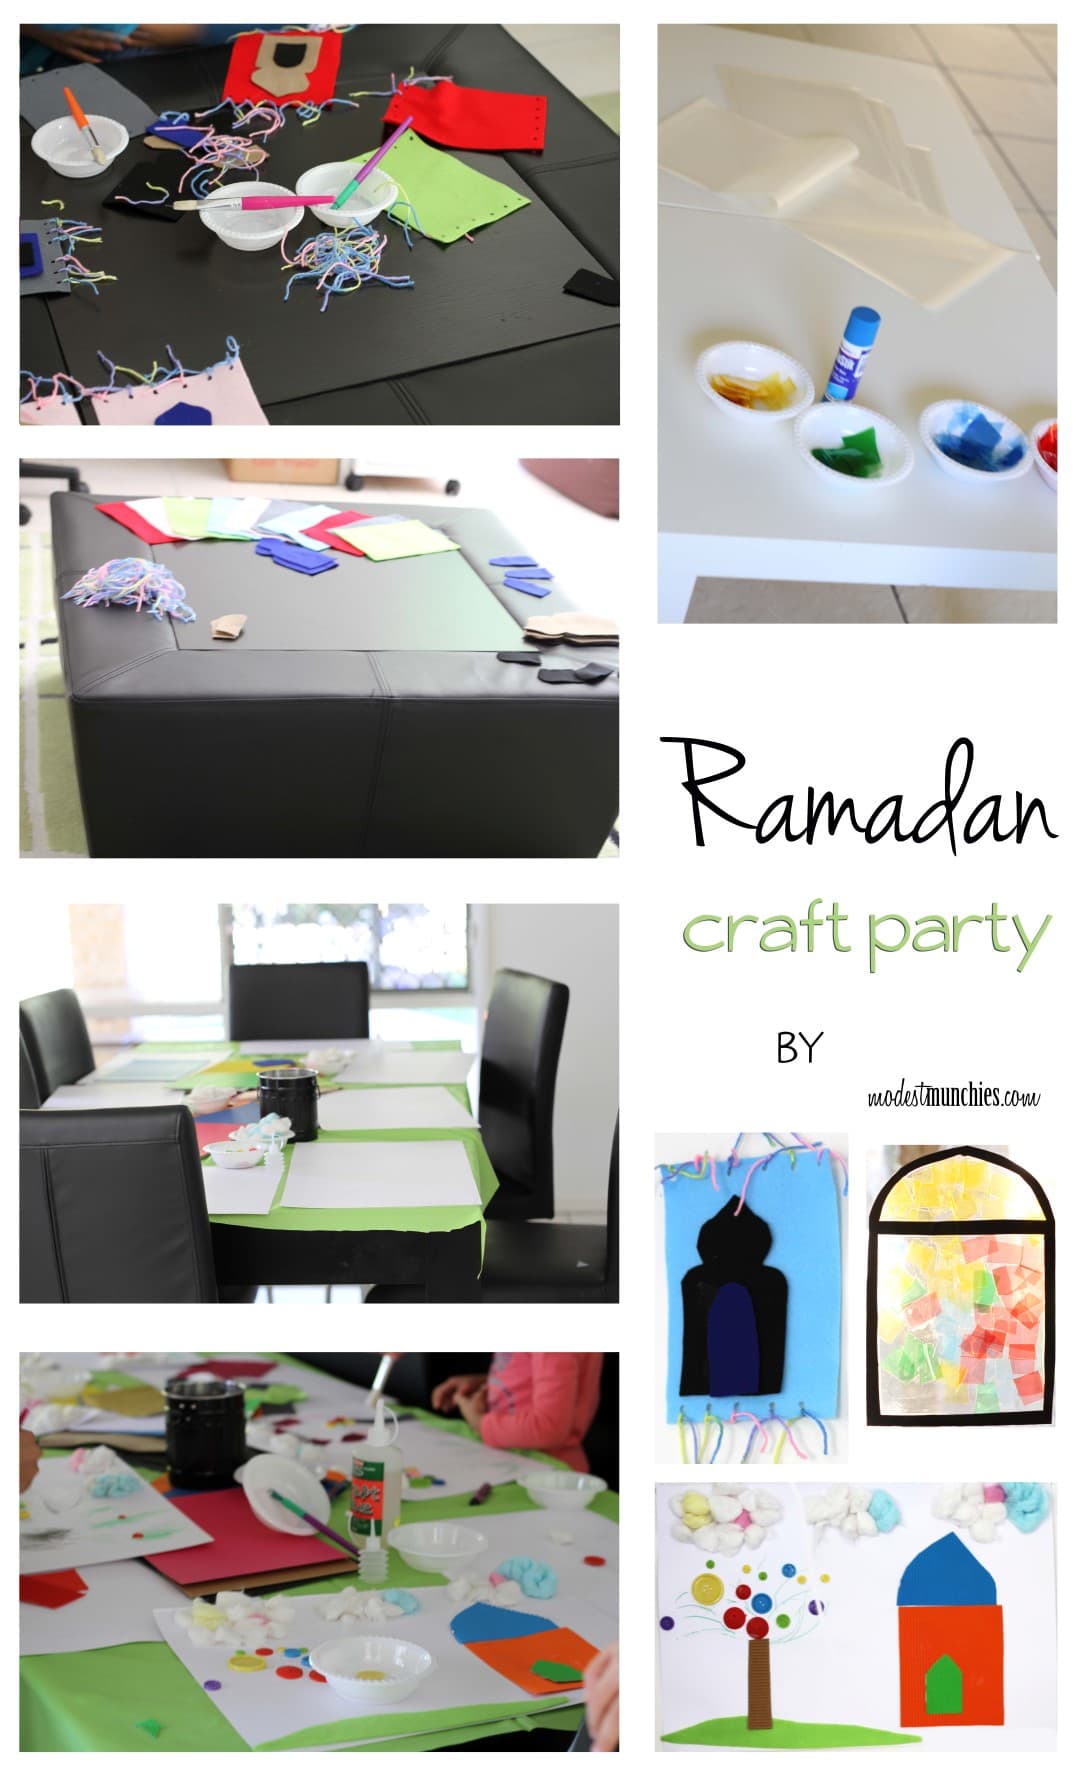 Ramadan craft party image (Large)